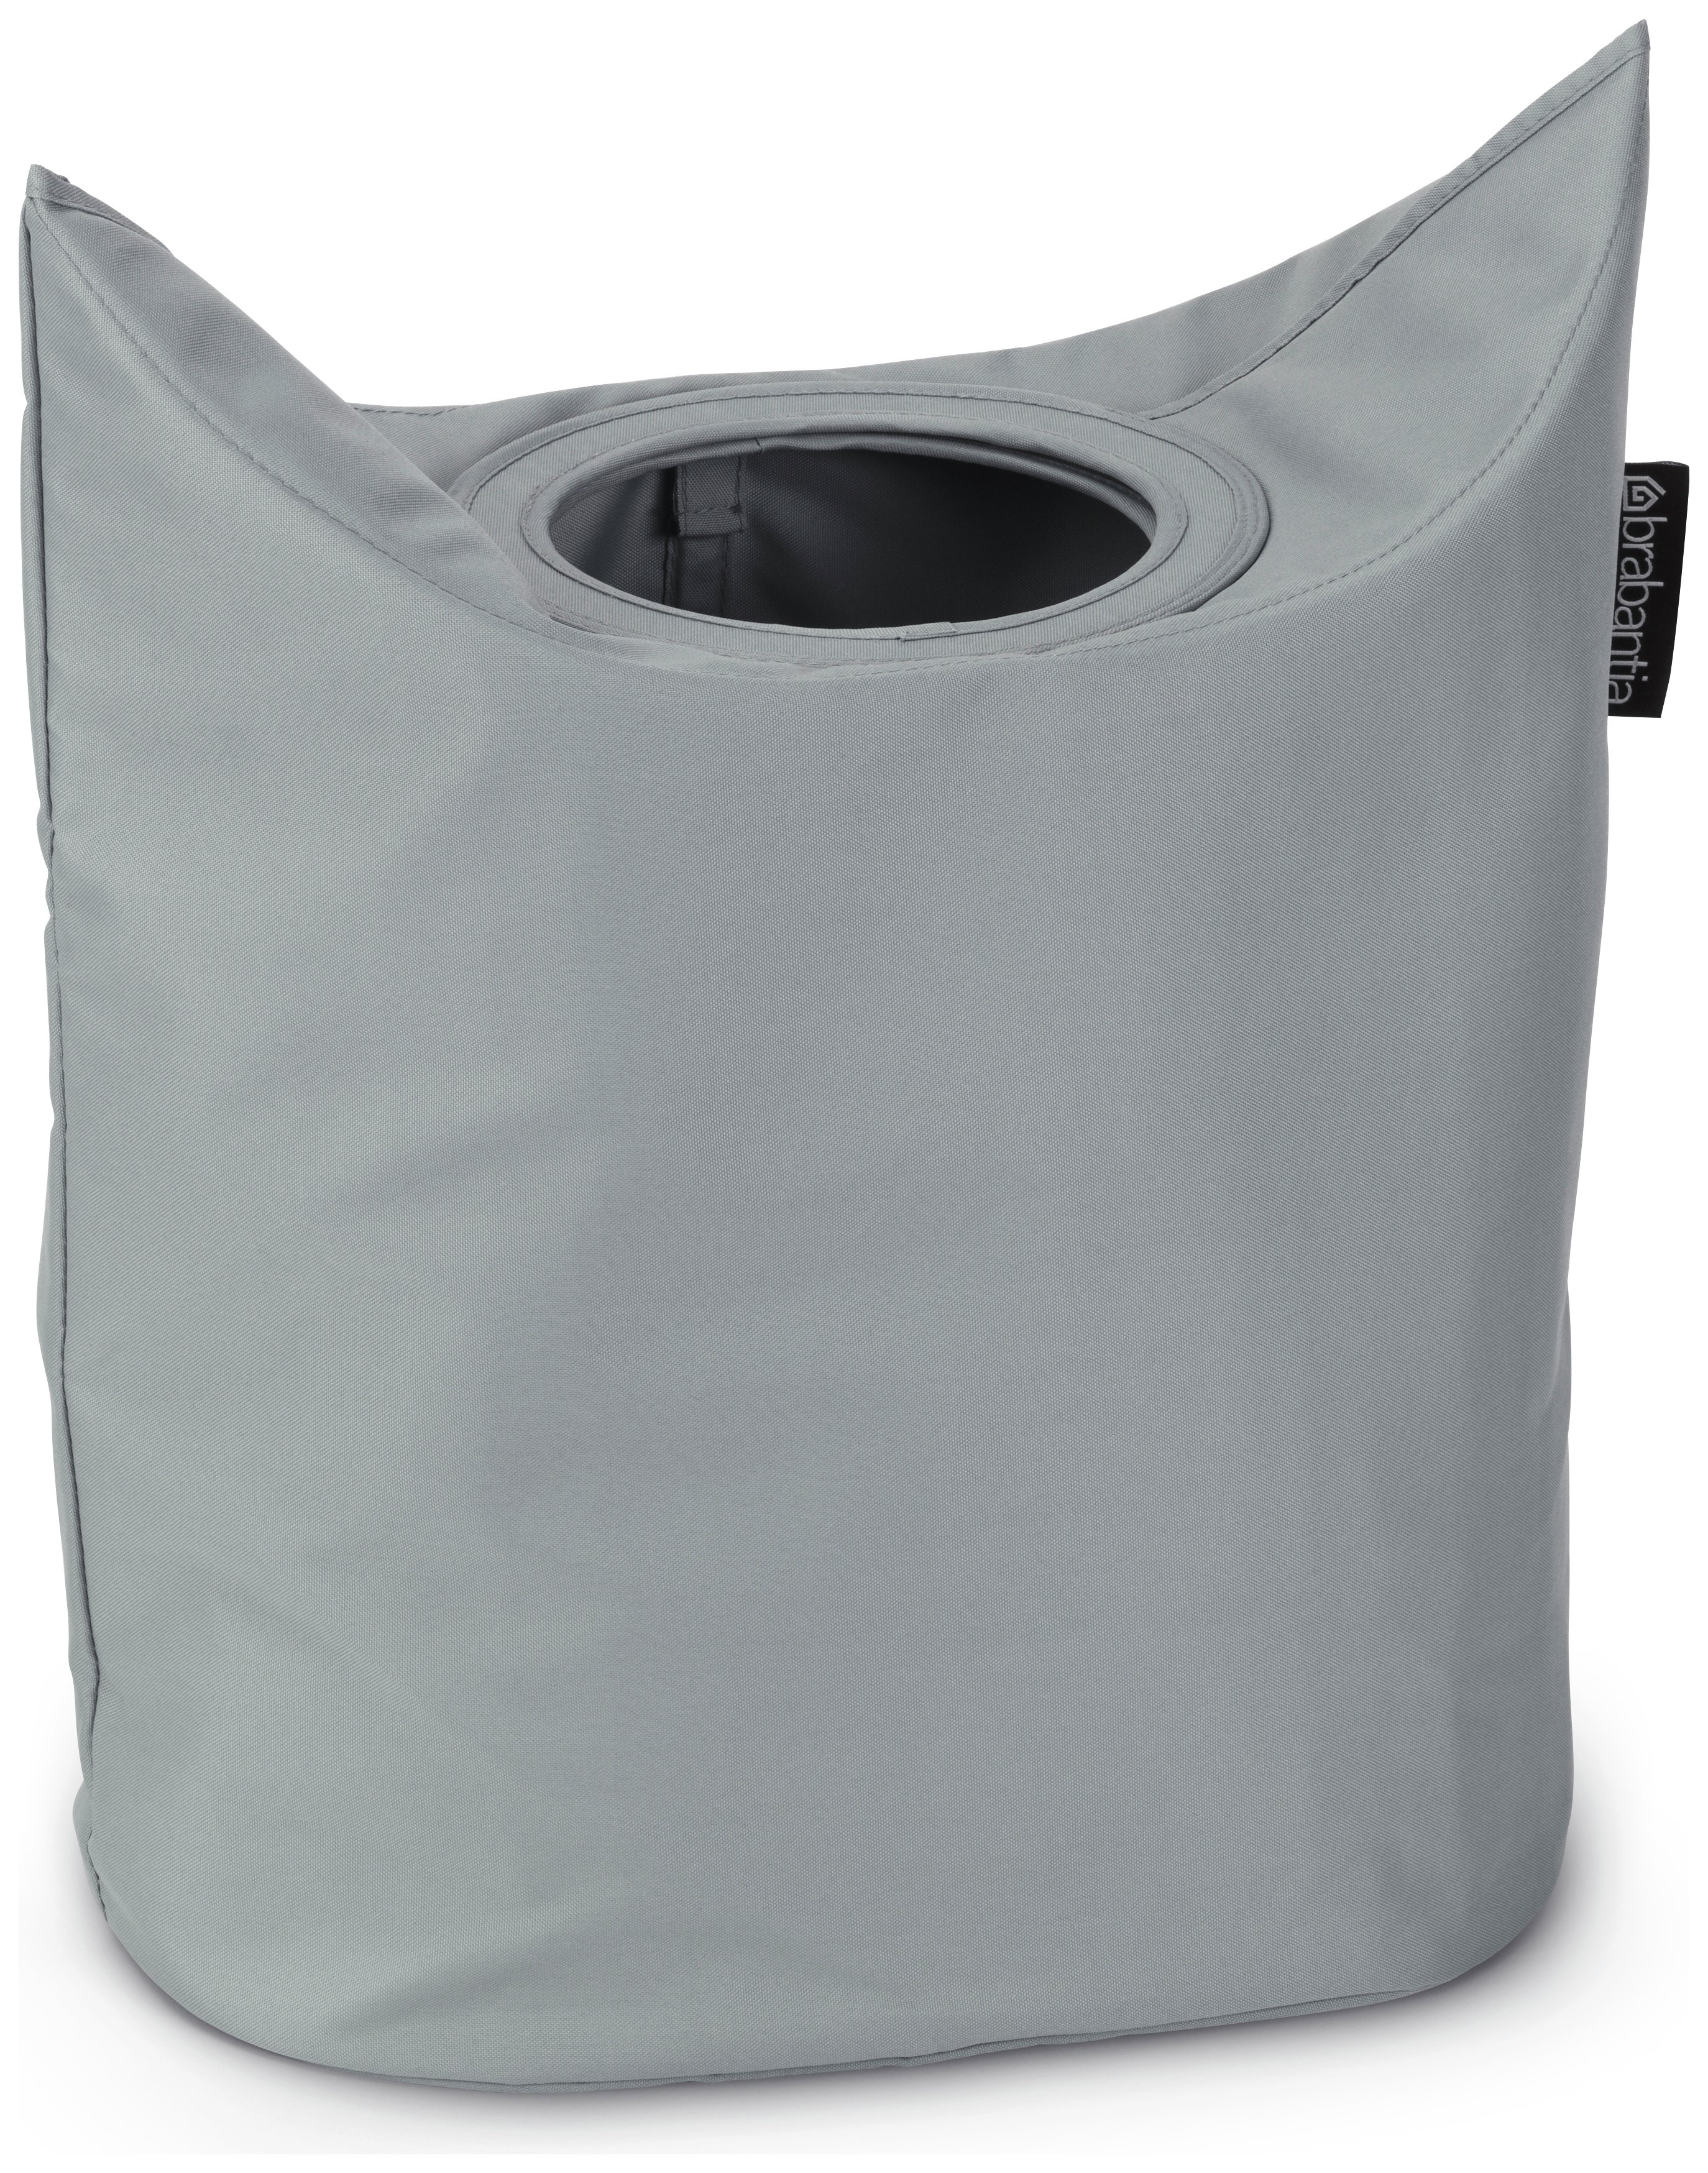 Brabantia 50 Litre Oval Laundry Bag - Grey